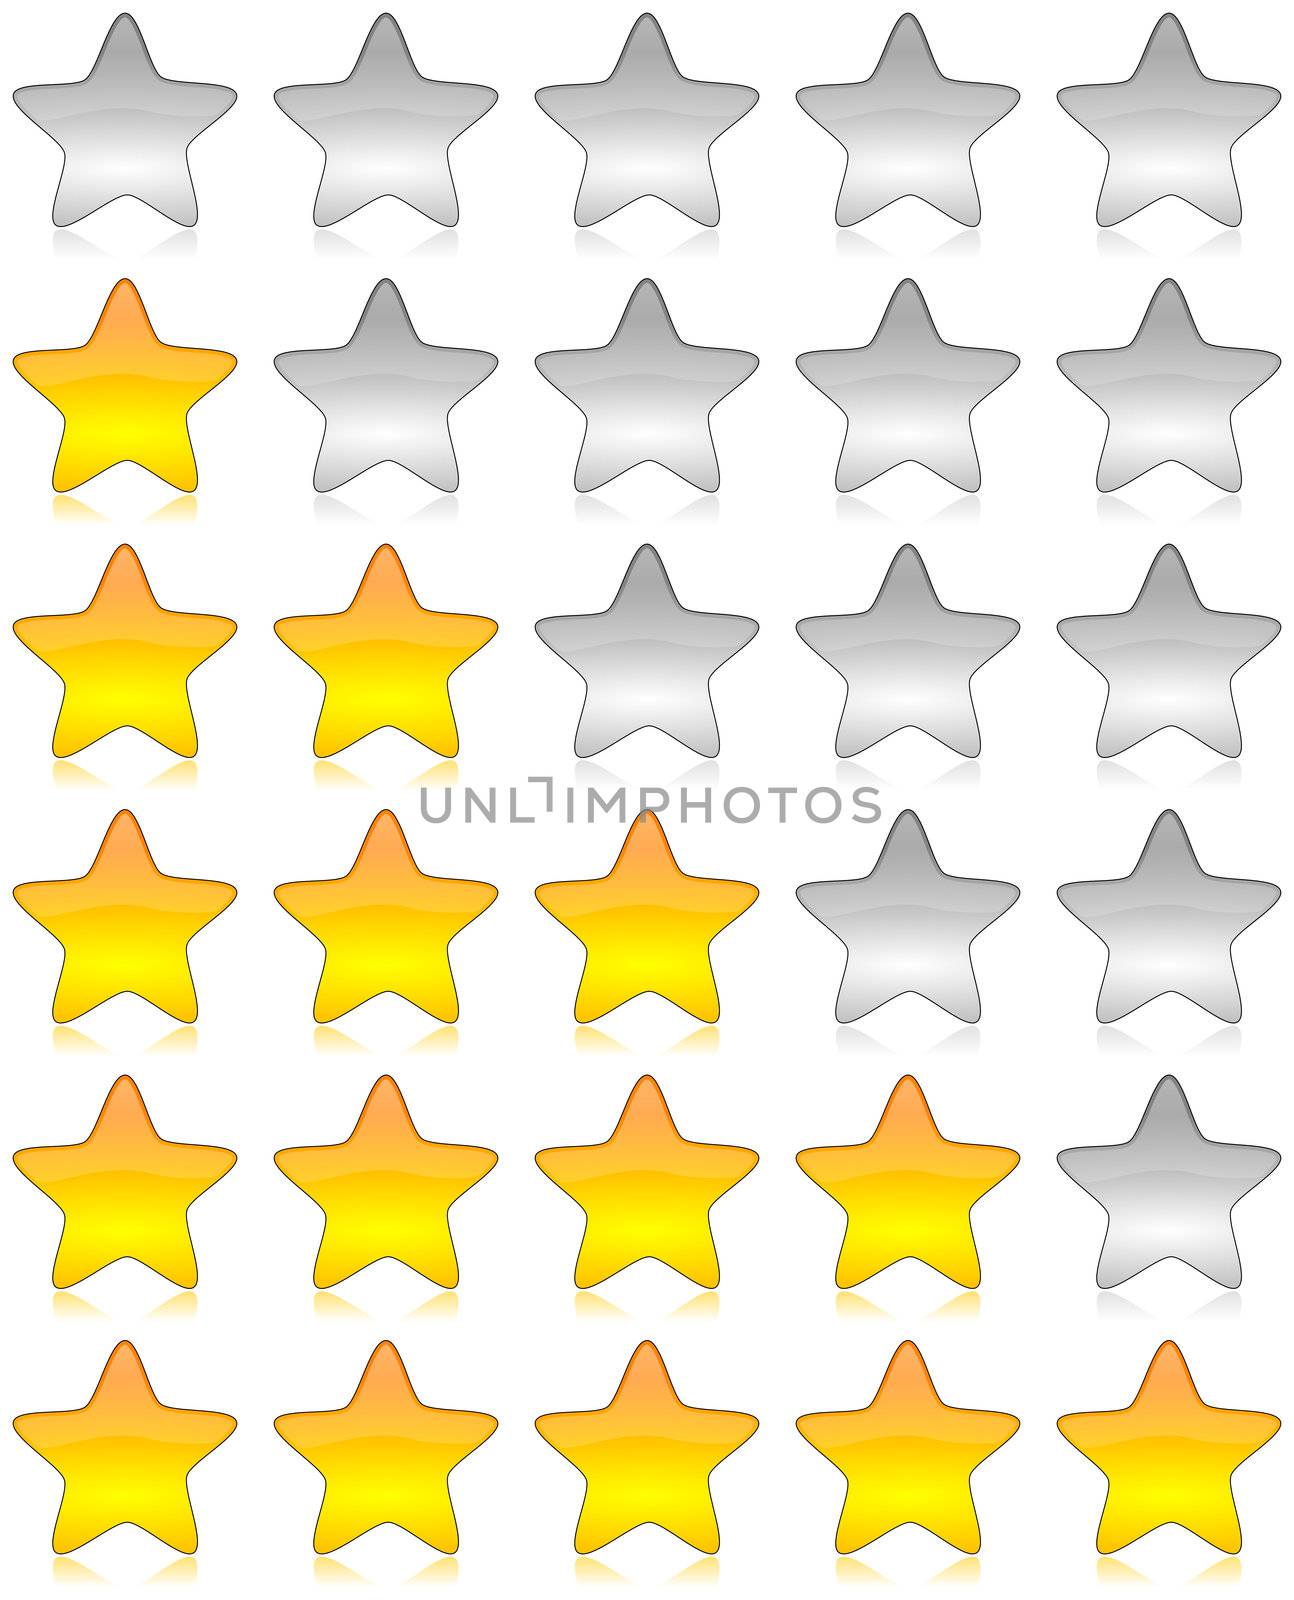 Rating stars survey by make